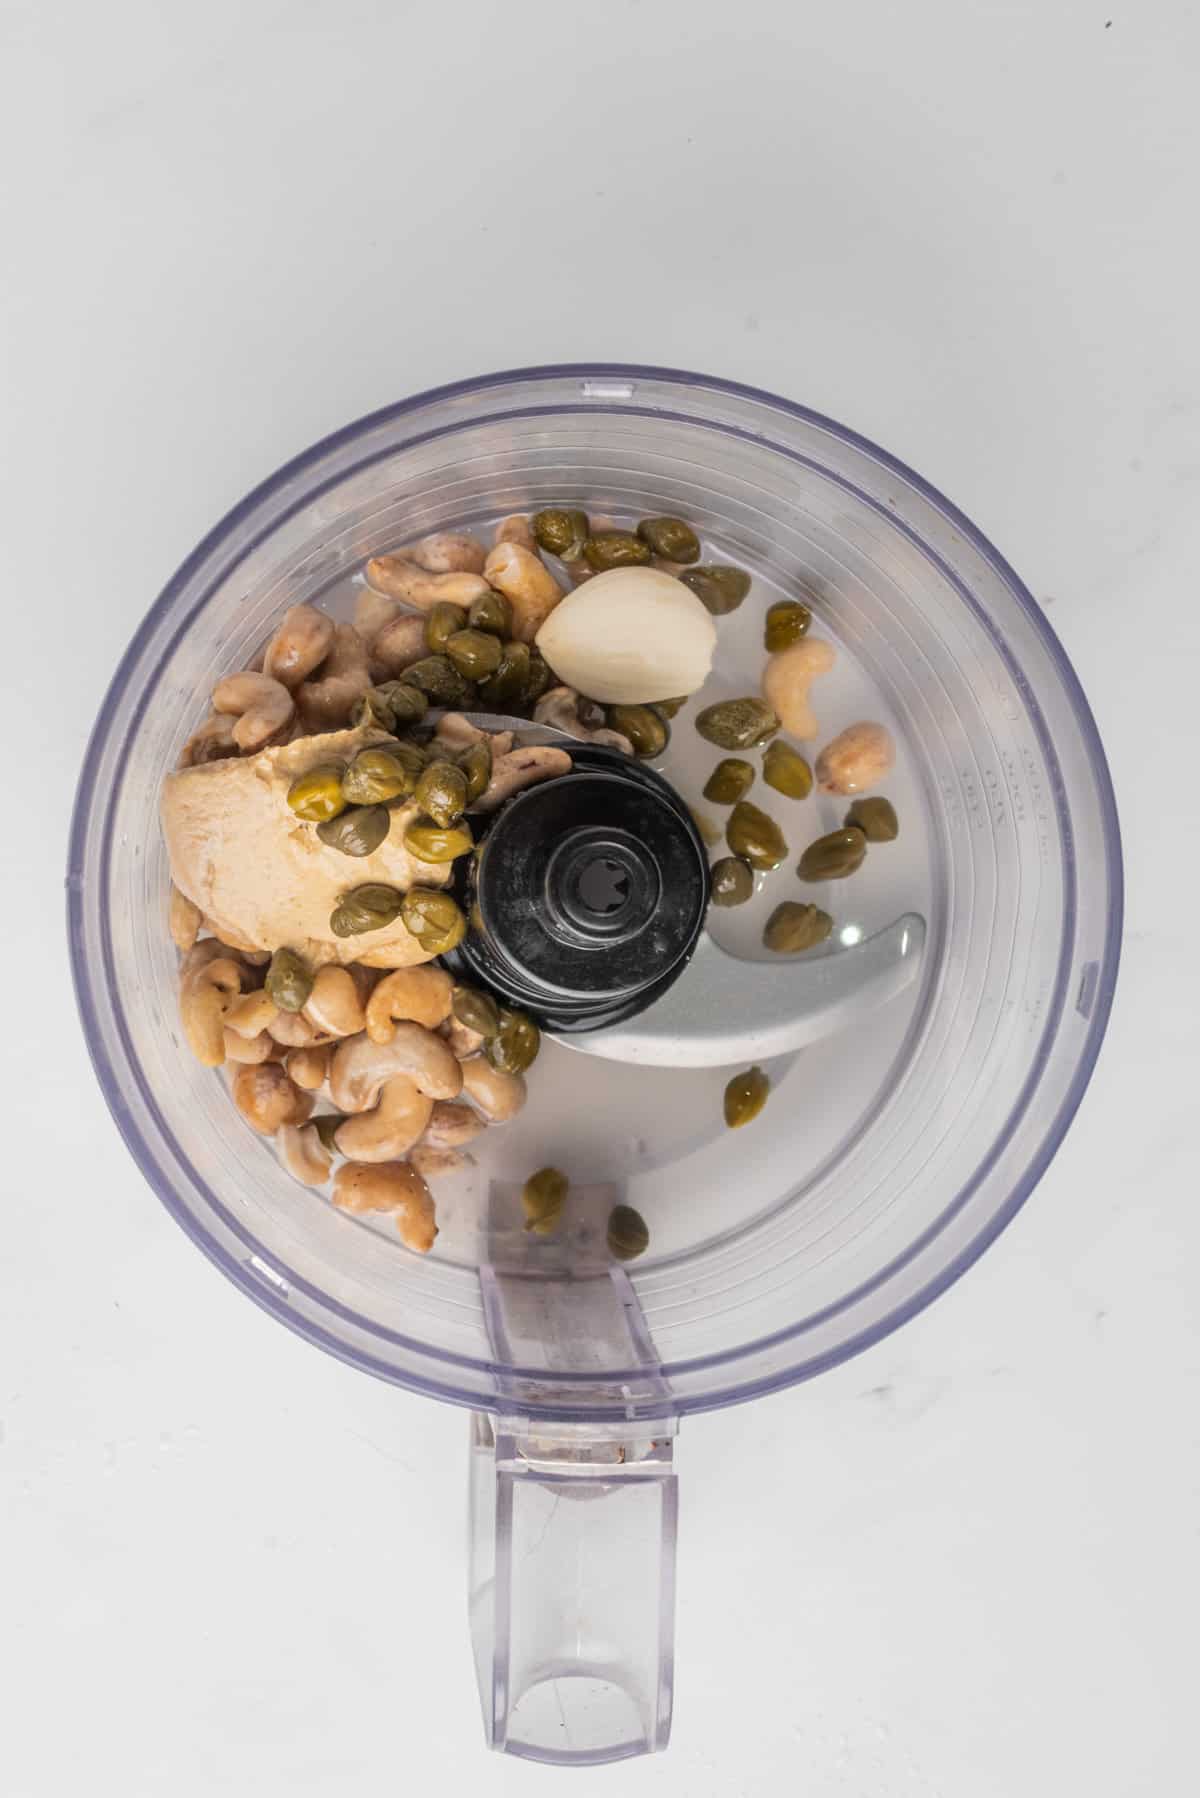 An image of vegan caesar salad dressing ingredients in a food processor before blending.